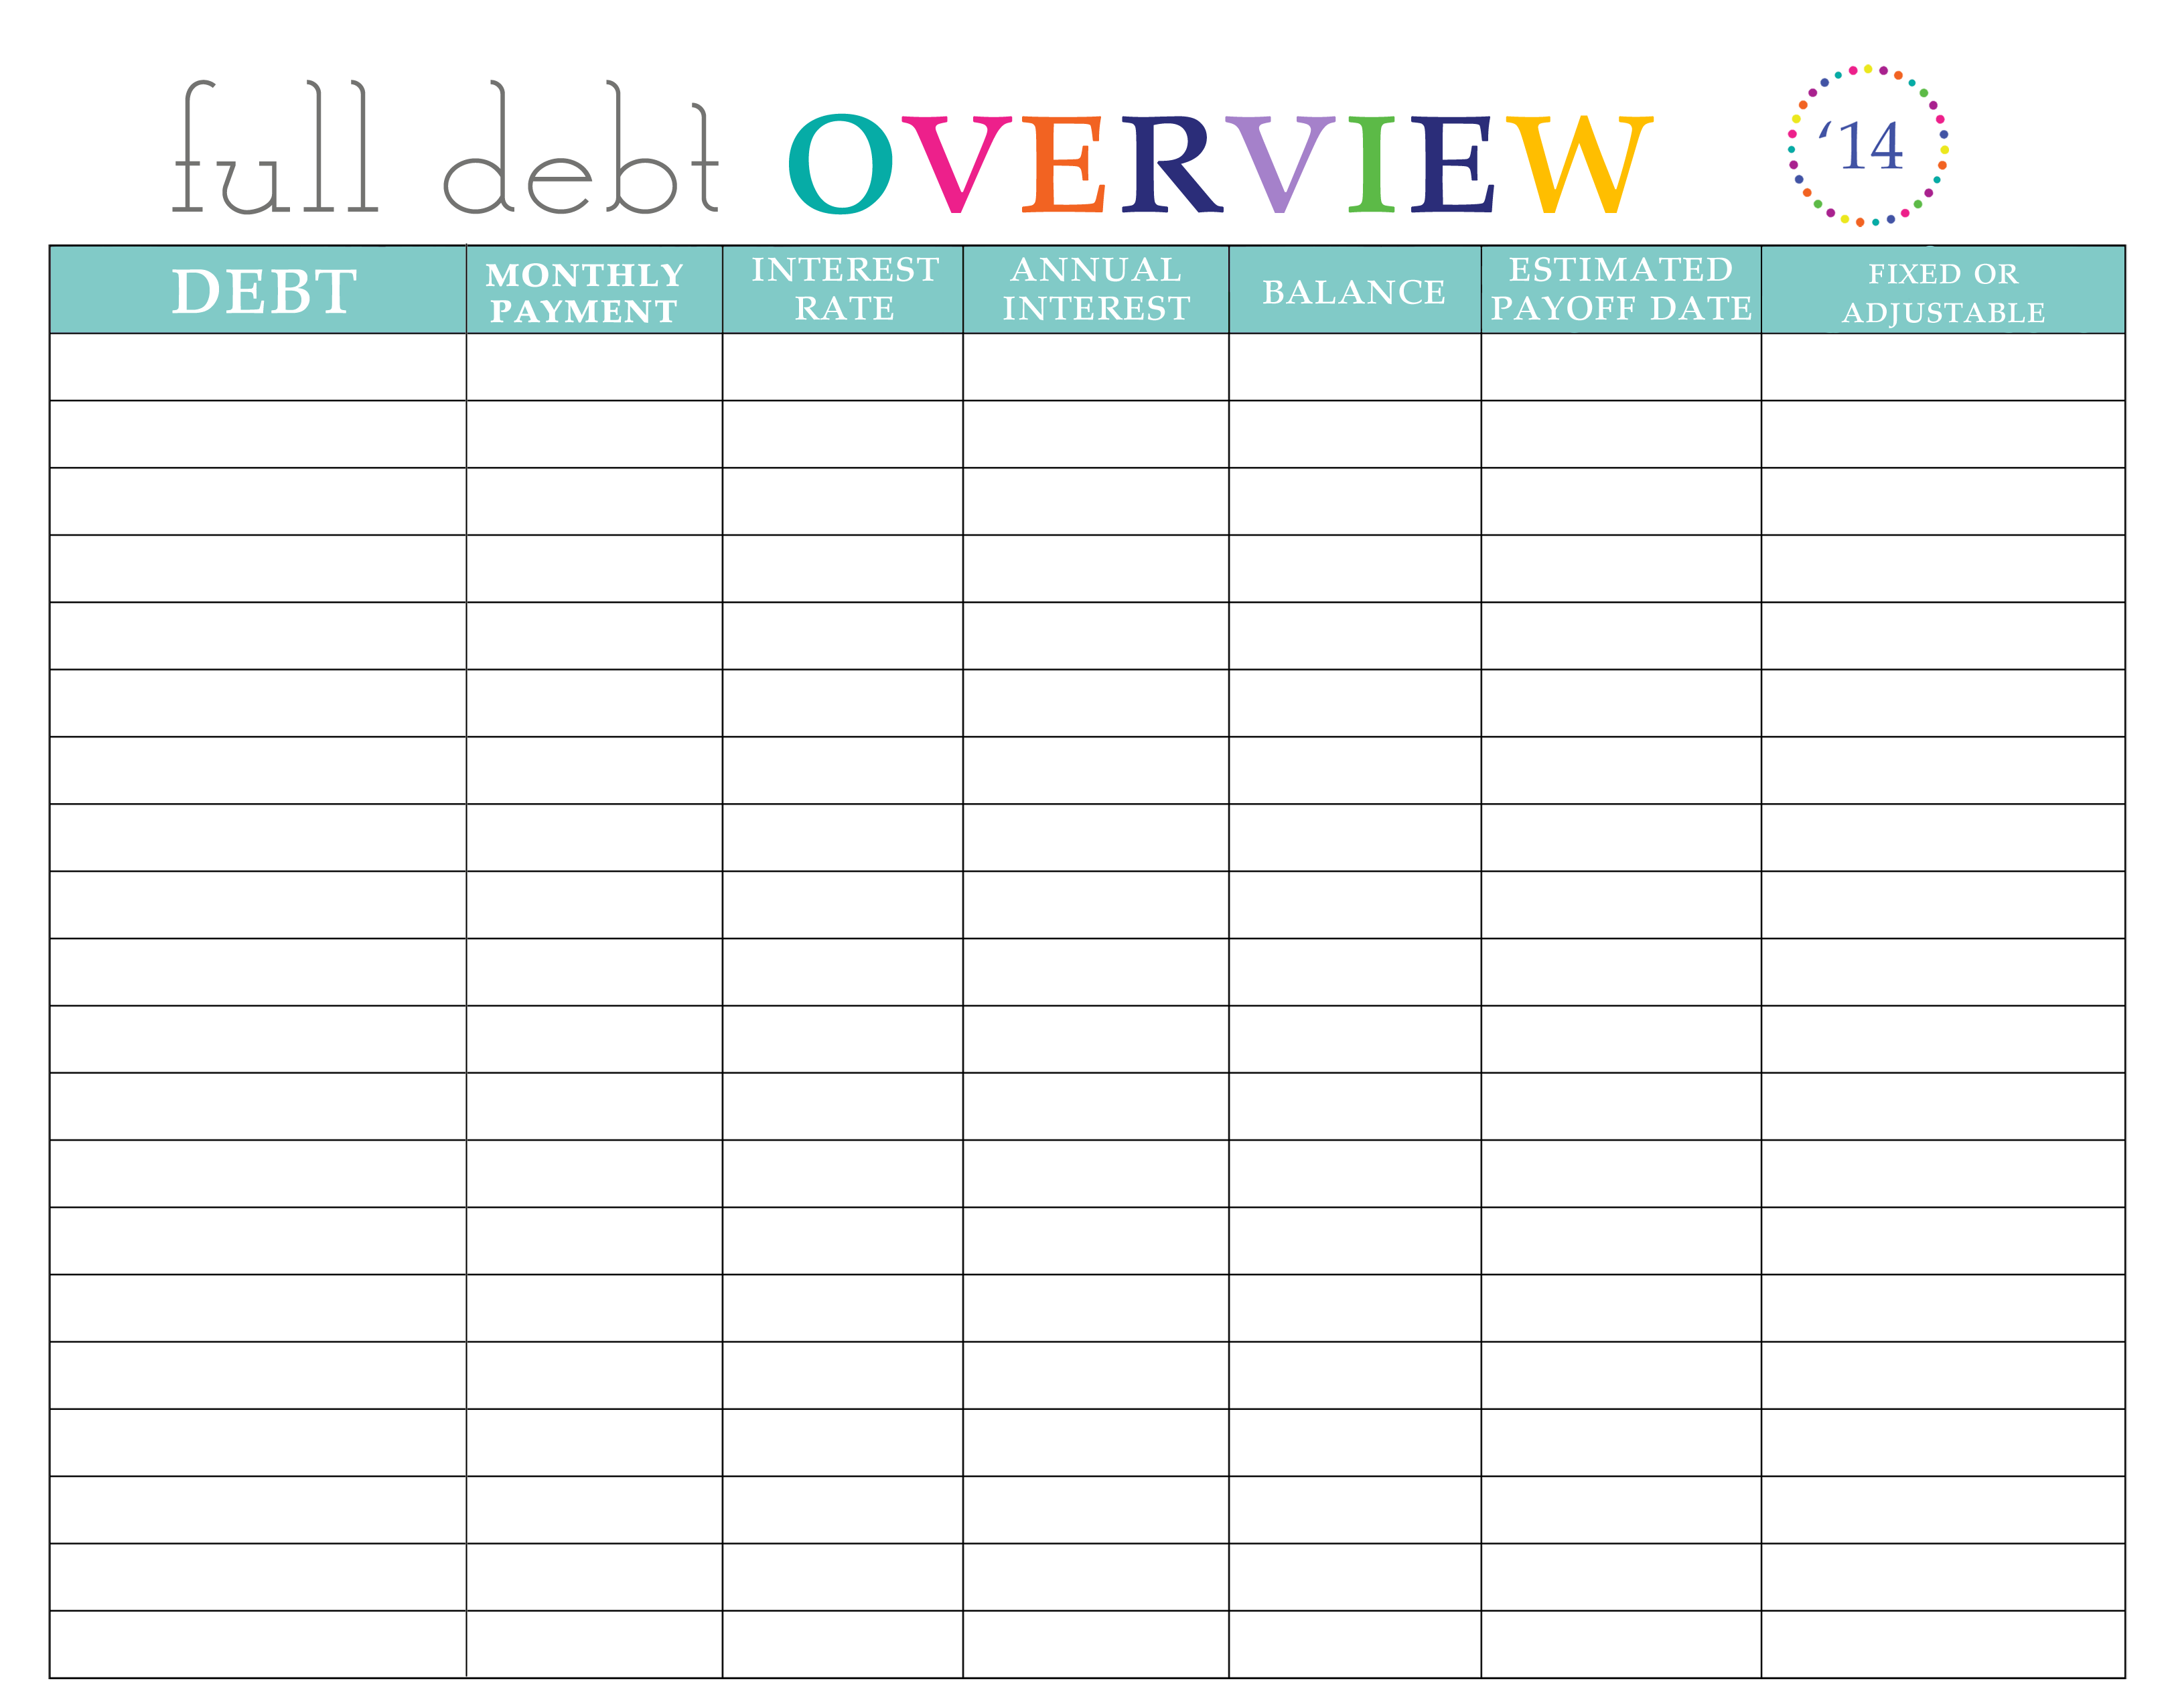 Full+Debt+Overview